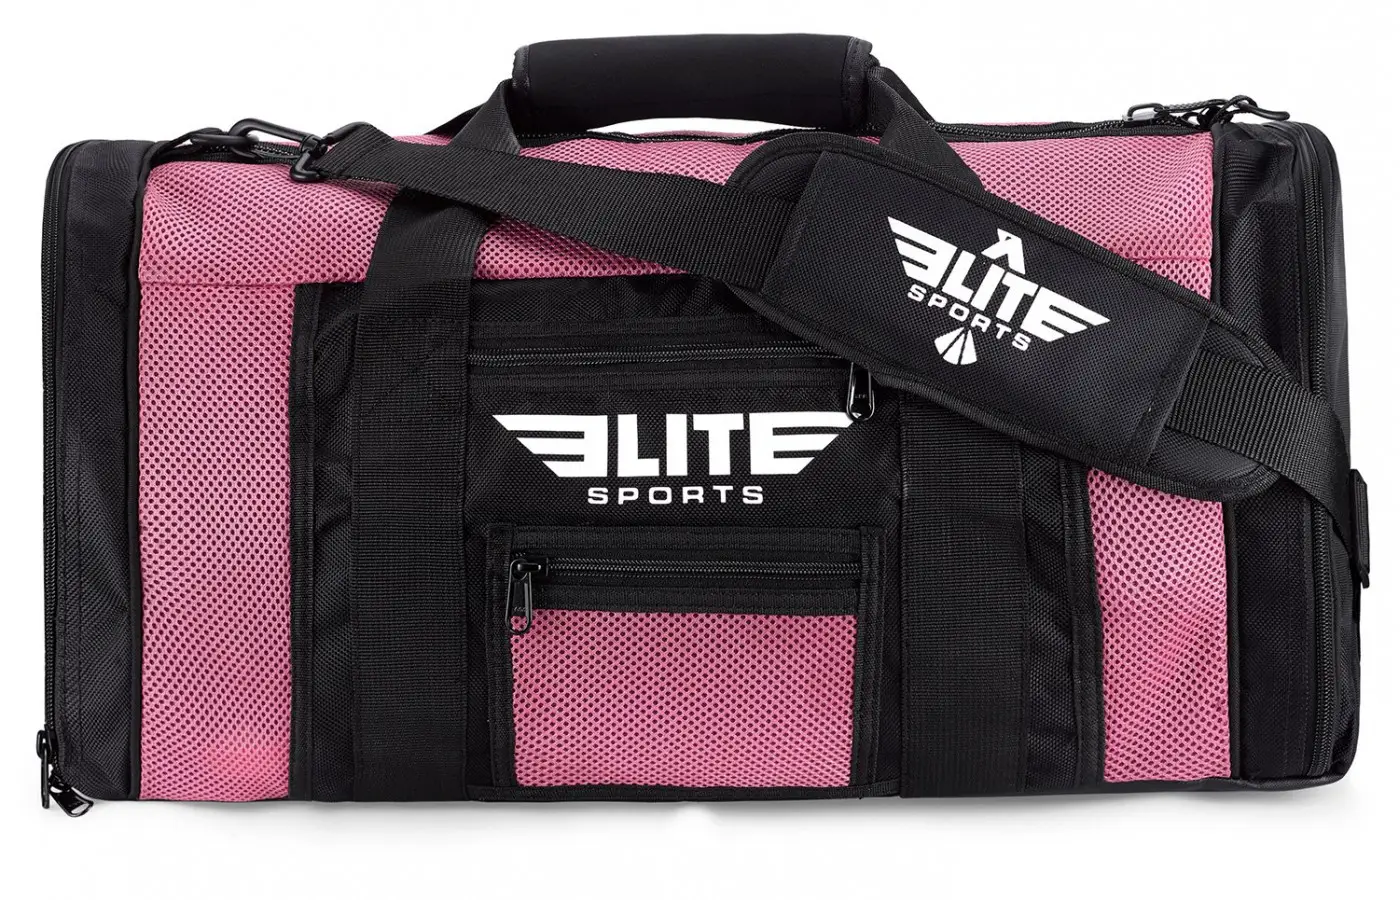 Elite sports mesh pink